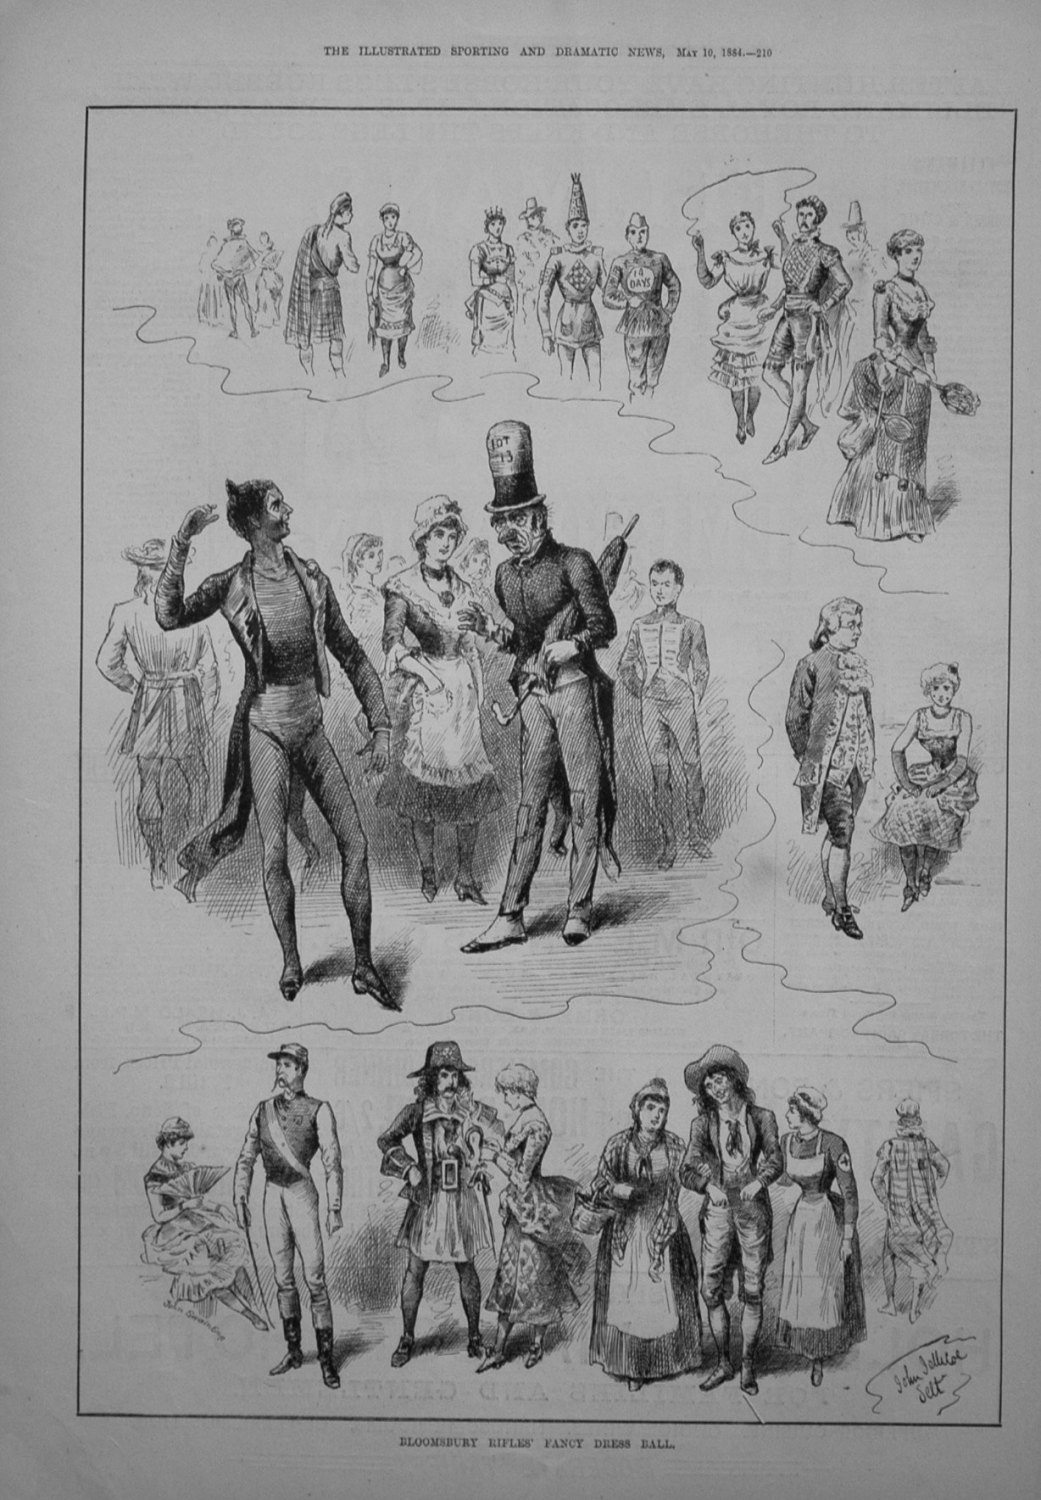 Bloomsbury Rifles Fancy Dress Ball. 1884